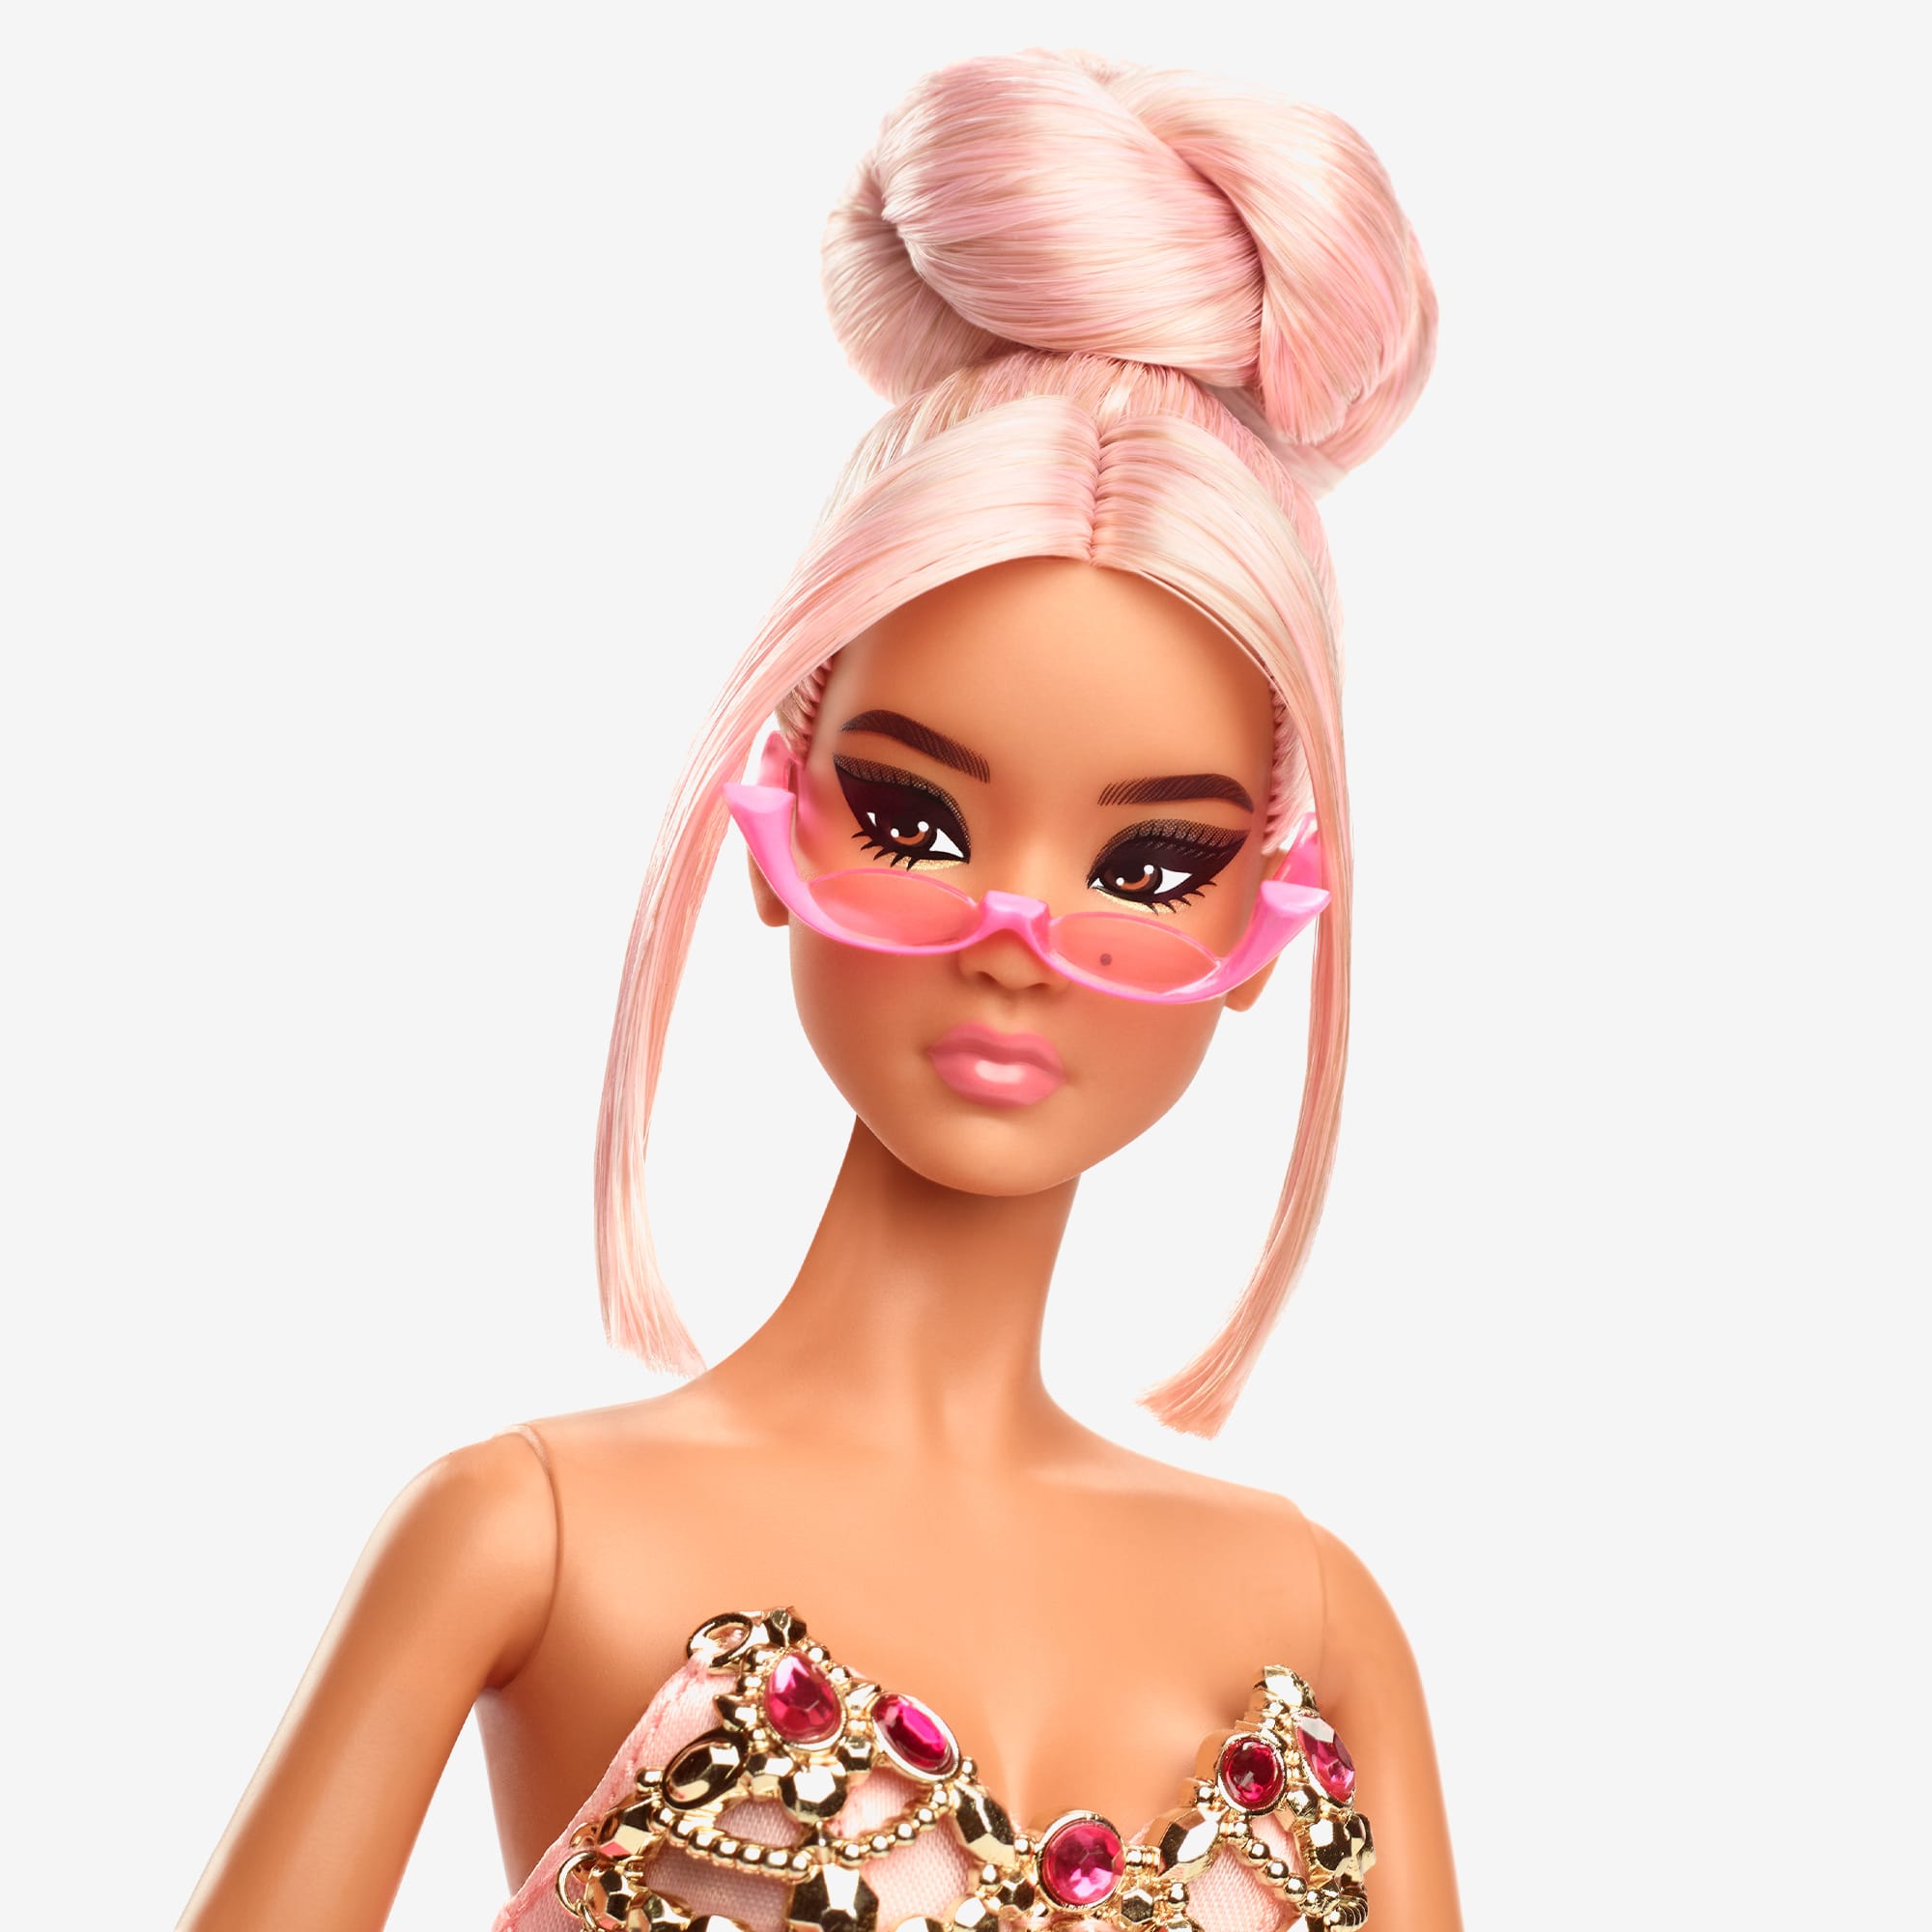 Light Pink Barbie Graphic Bodysuit - 0048.000507.0007483 BarbiePedia